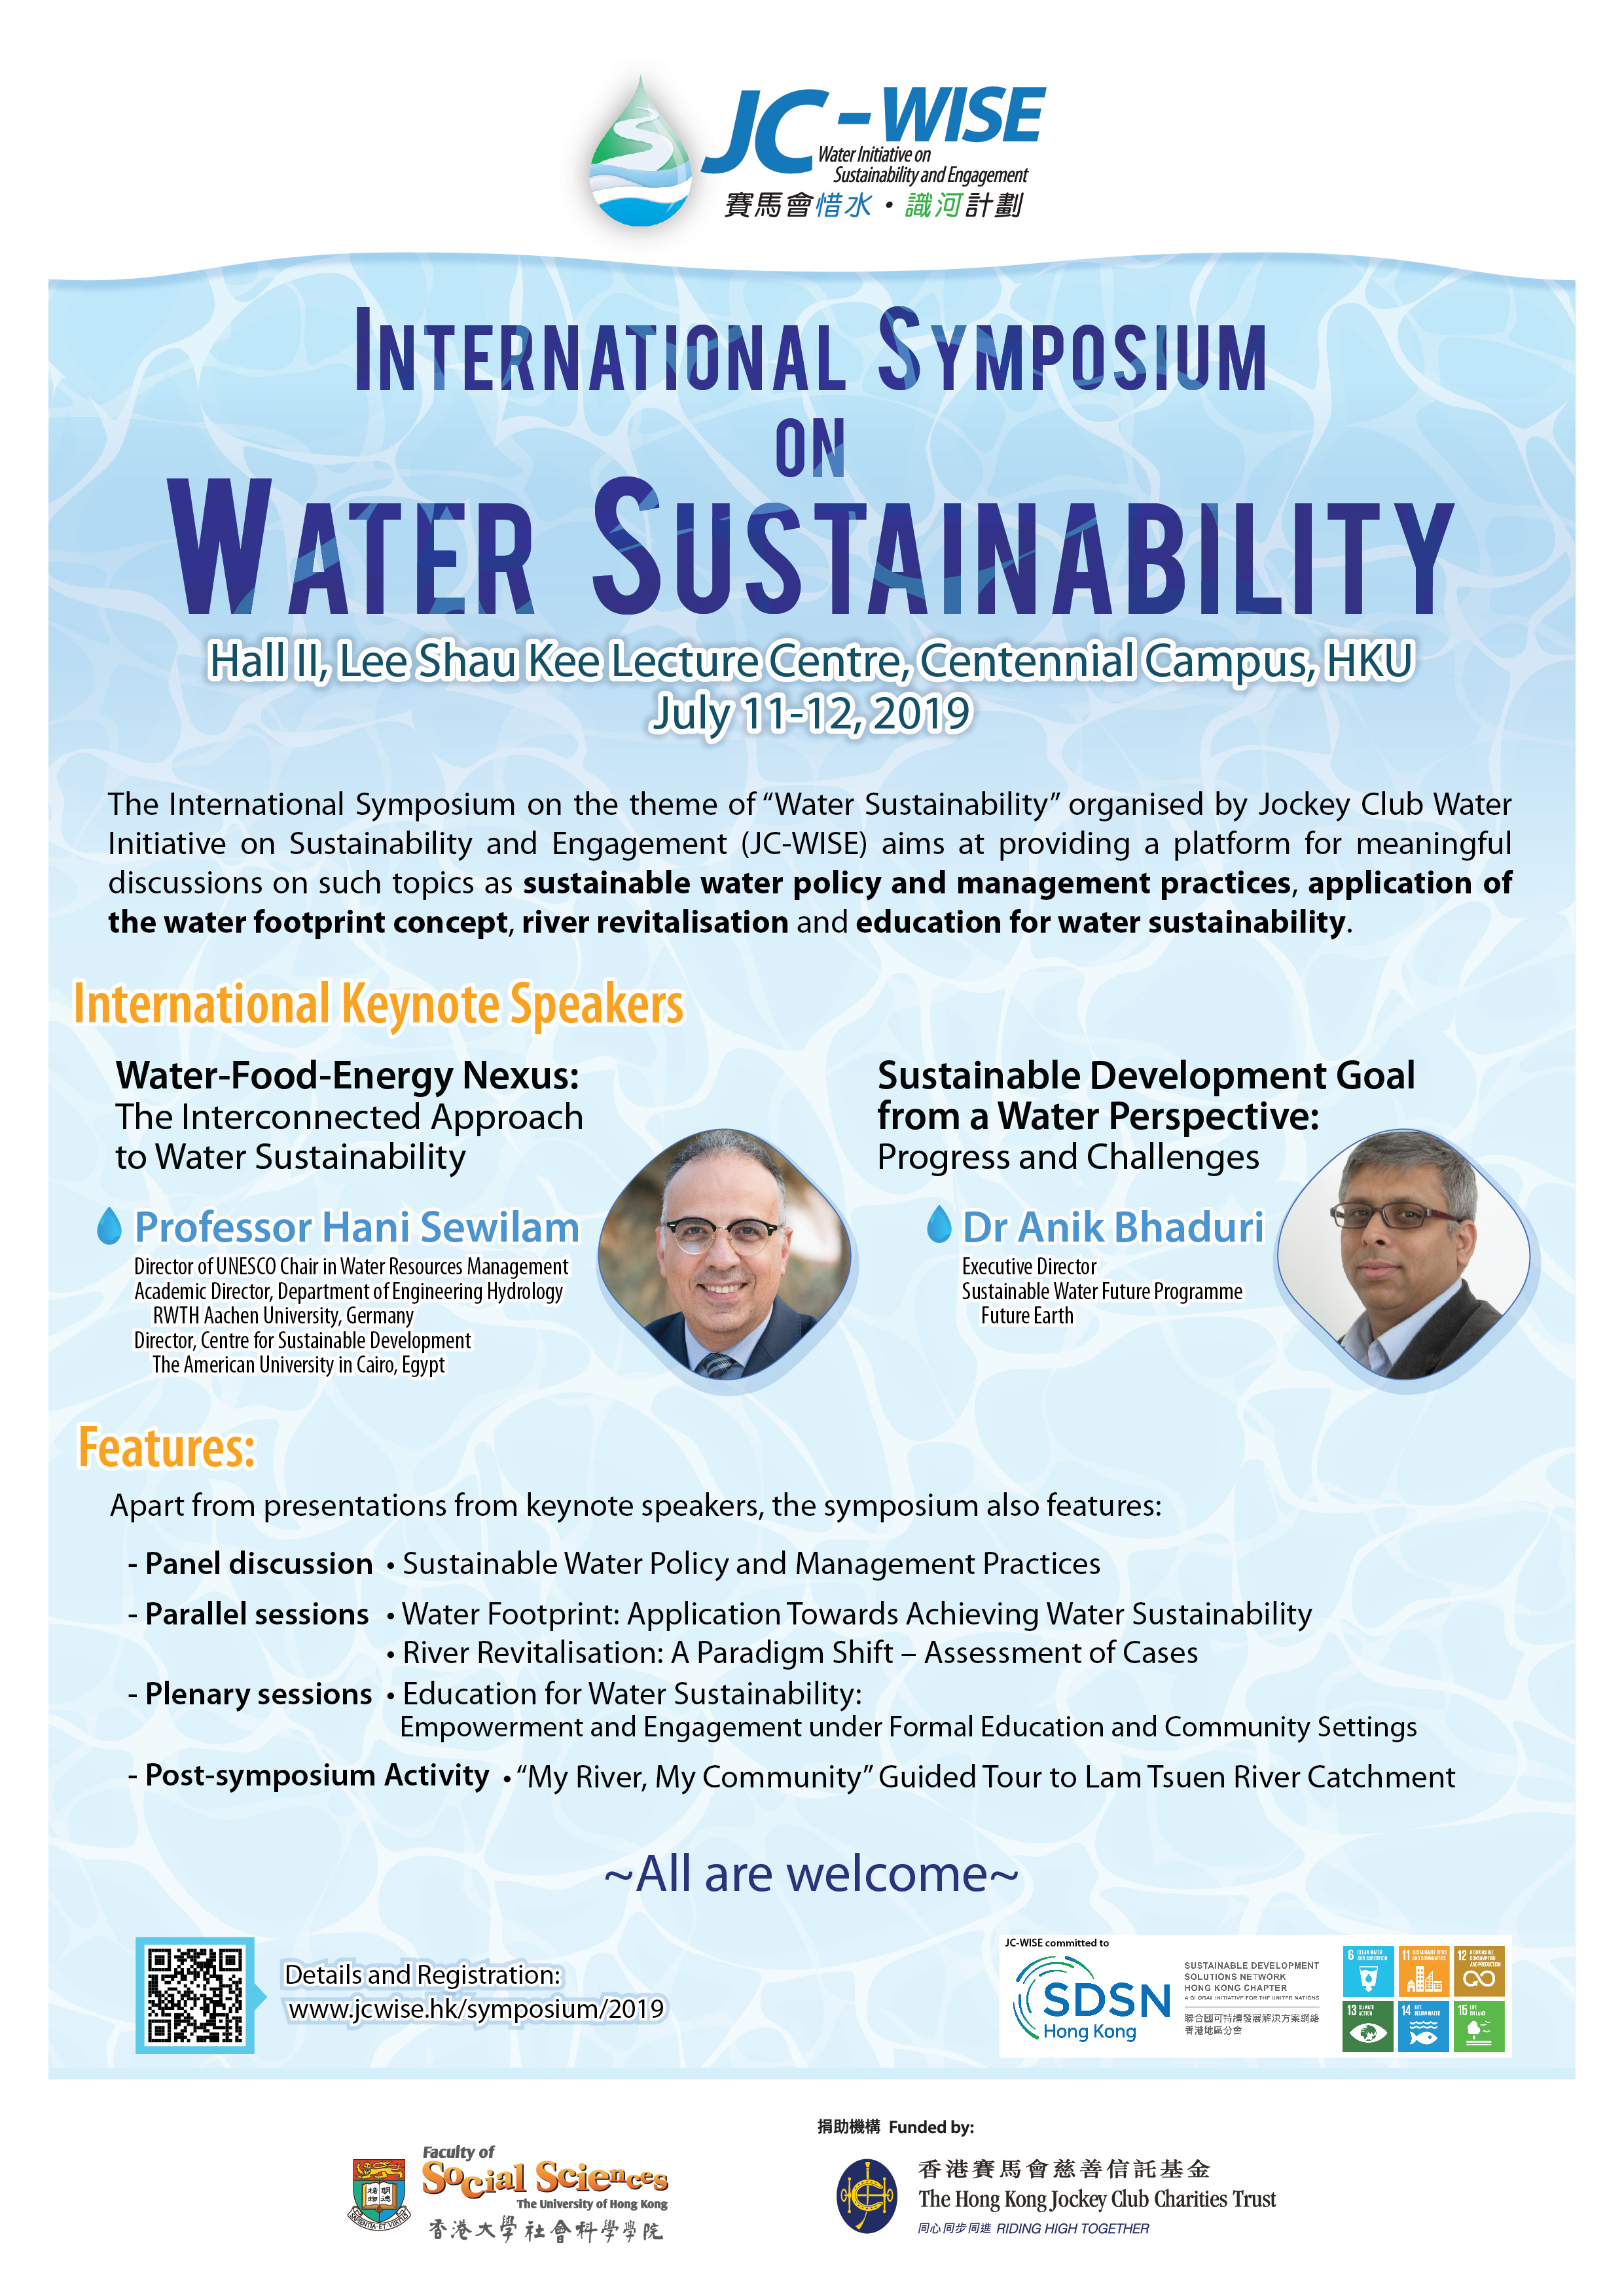 JC-WISE International Symposium on Water Sustainability